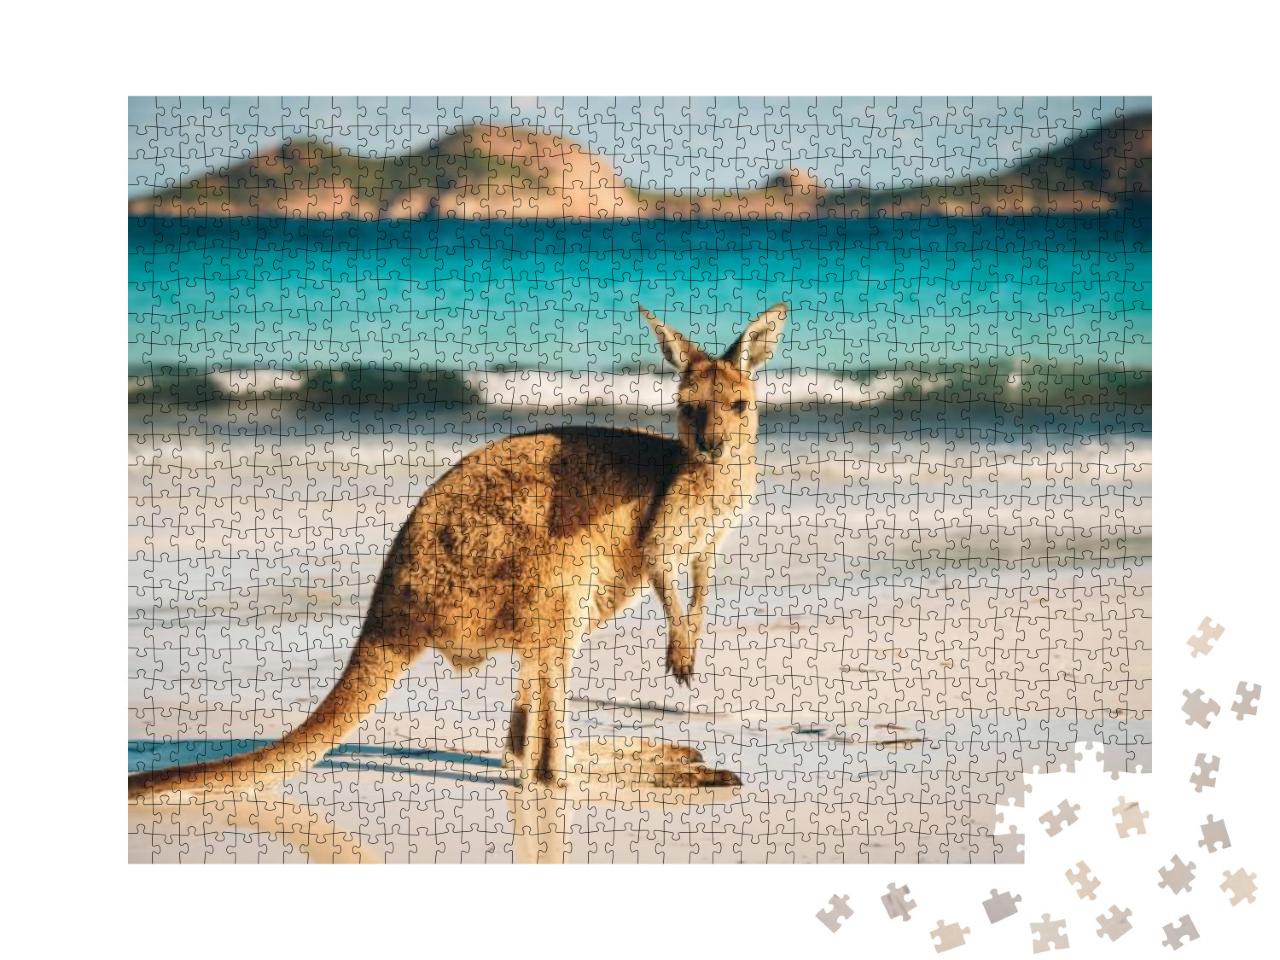 Puzzle 1000 Teile „Känguru, Lucky Bay, Cape Le Grand National Park, Australien“